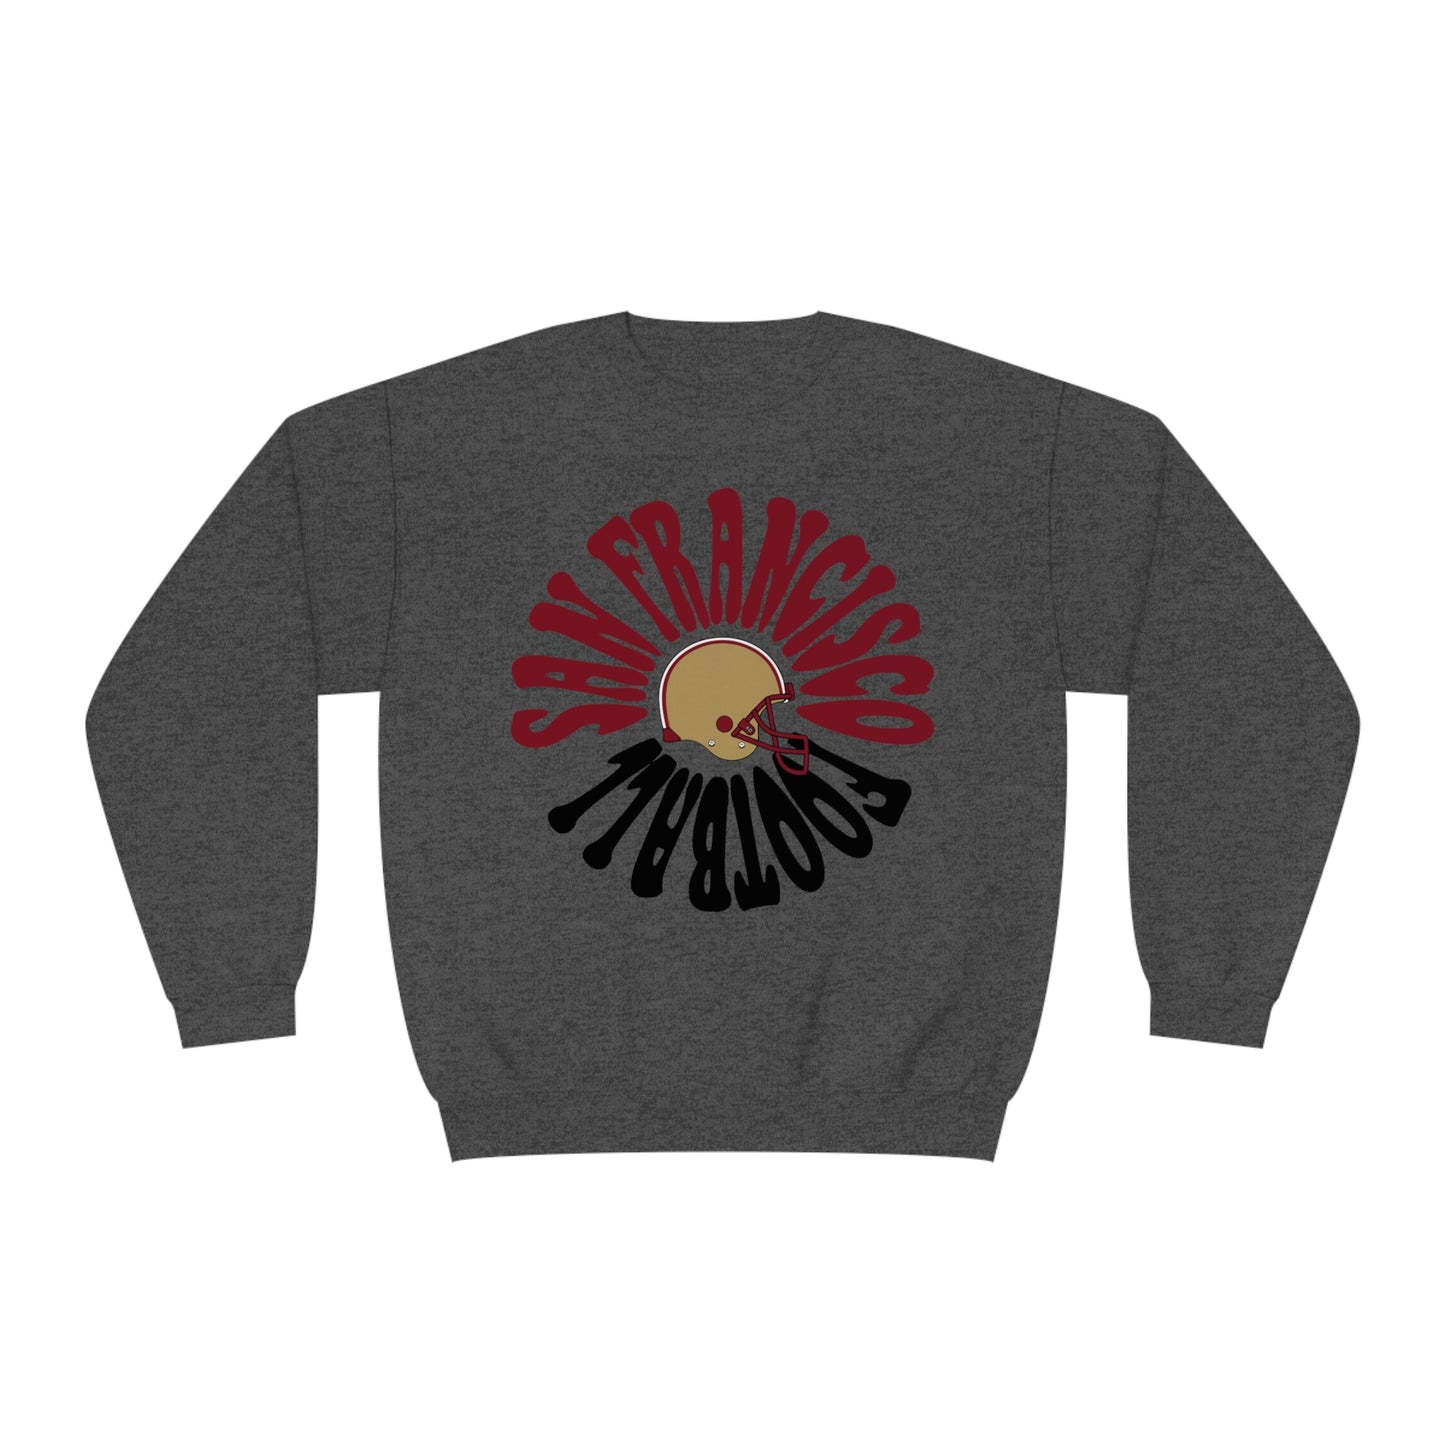 Retro San Francisco 49ERS Crewneck - Vintage Football Sweatshirt - Men's Women's Unisex Apparel - Design 2